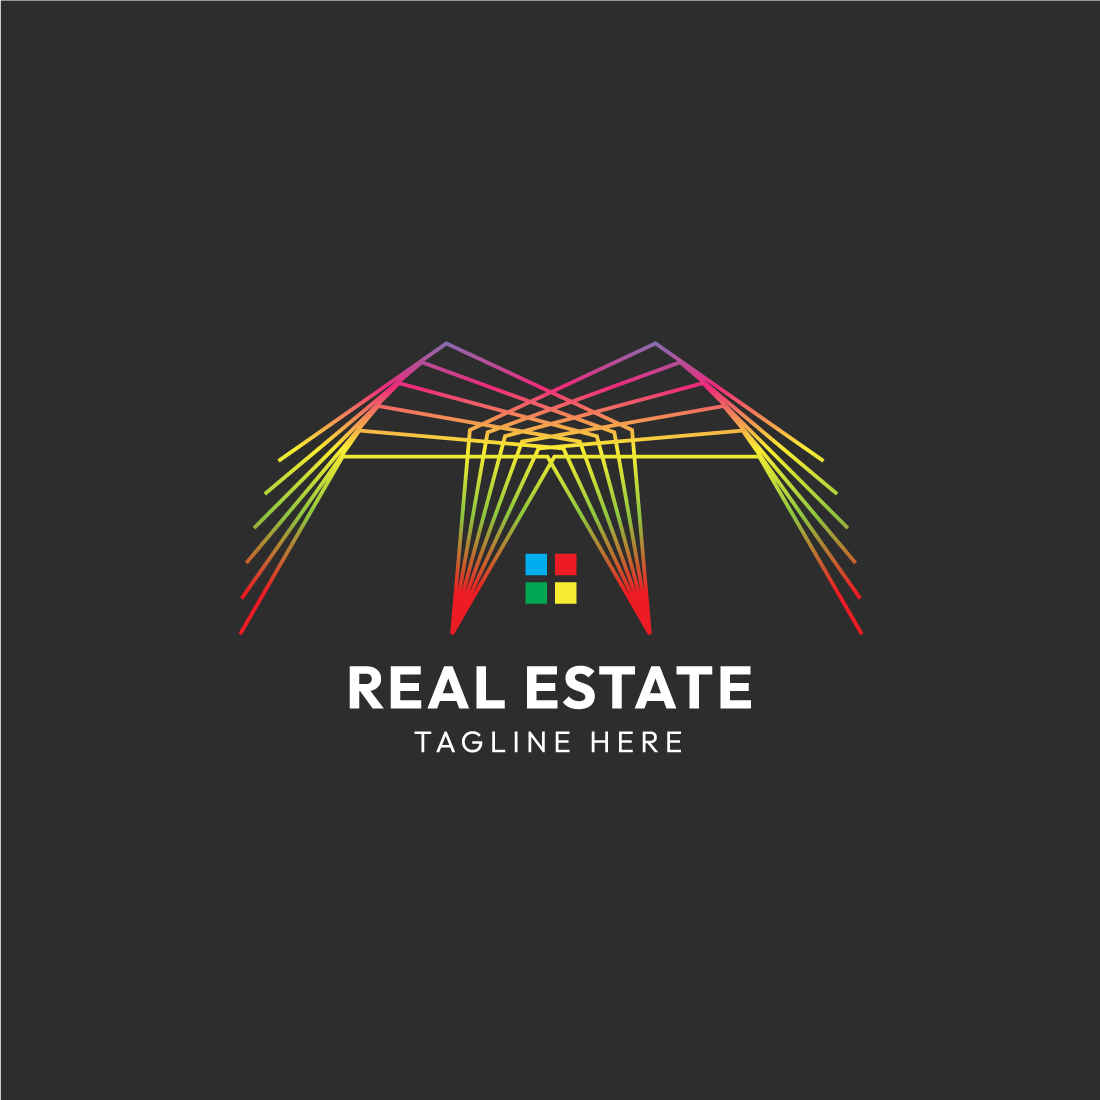 Elegant Real Estate Line Art Logo Design: Boost Your Brand with Timeless Sophistication preview image.